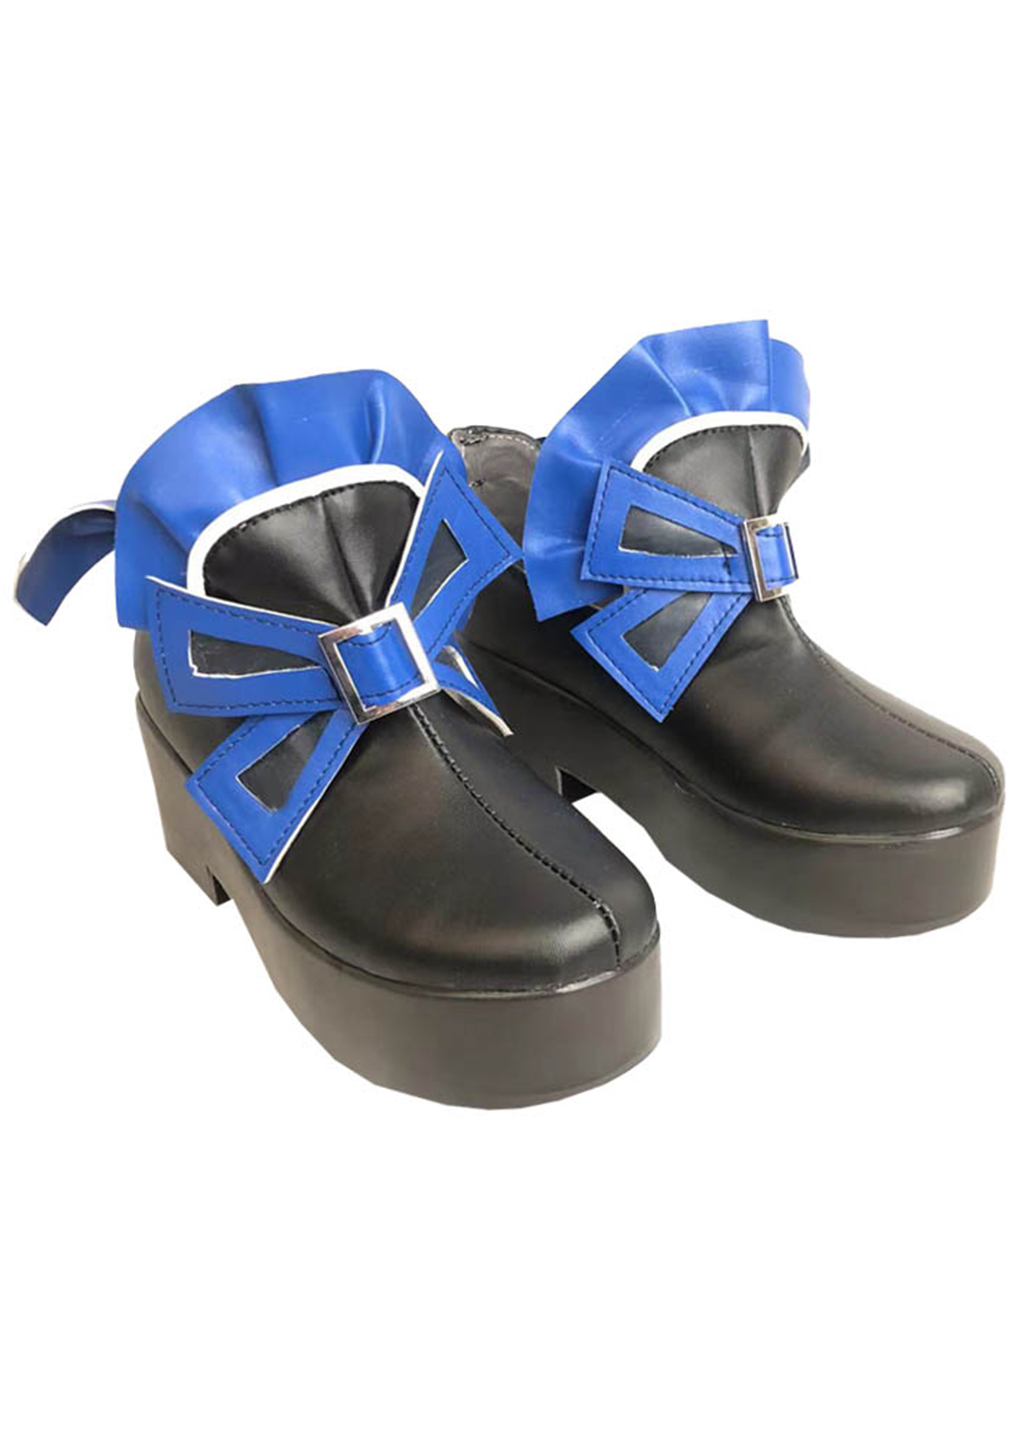 Furina Shoes Genshin Impact Boots Cosplay-Chaorenbuy Cosplay